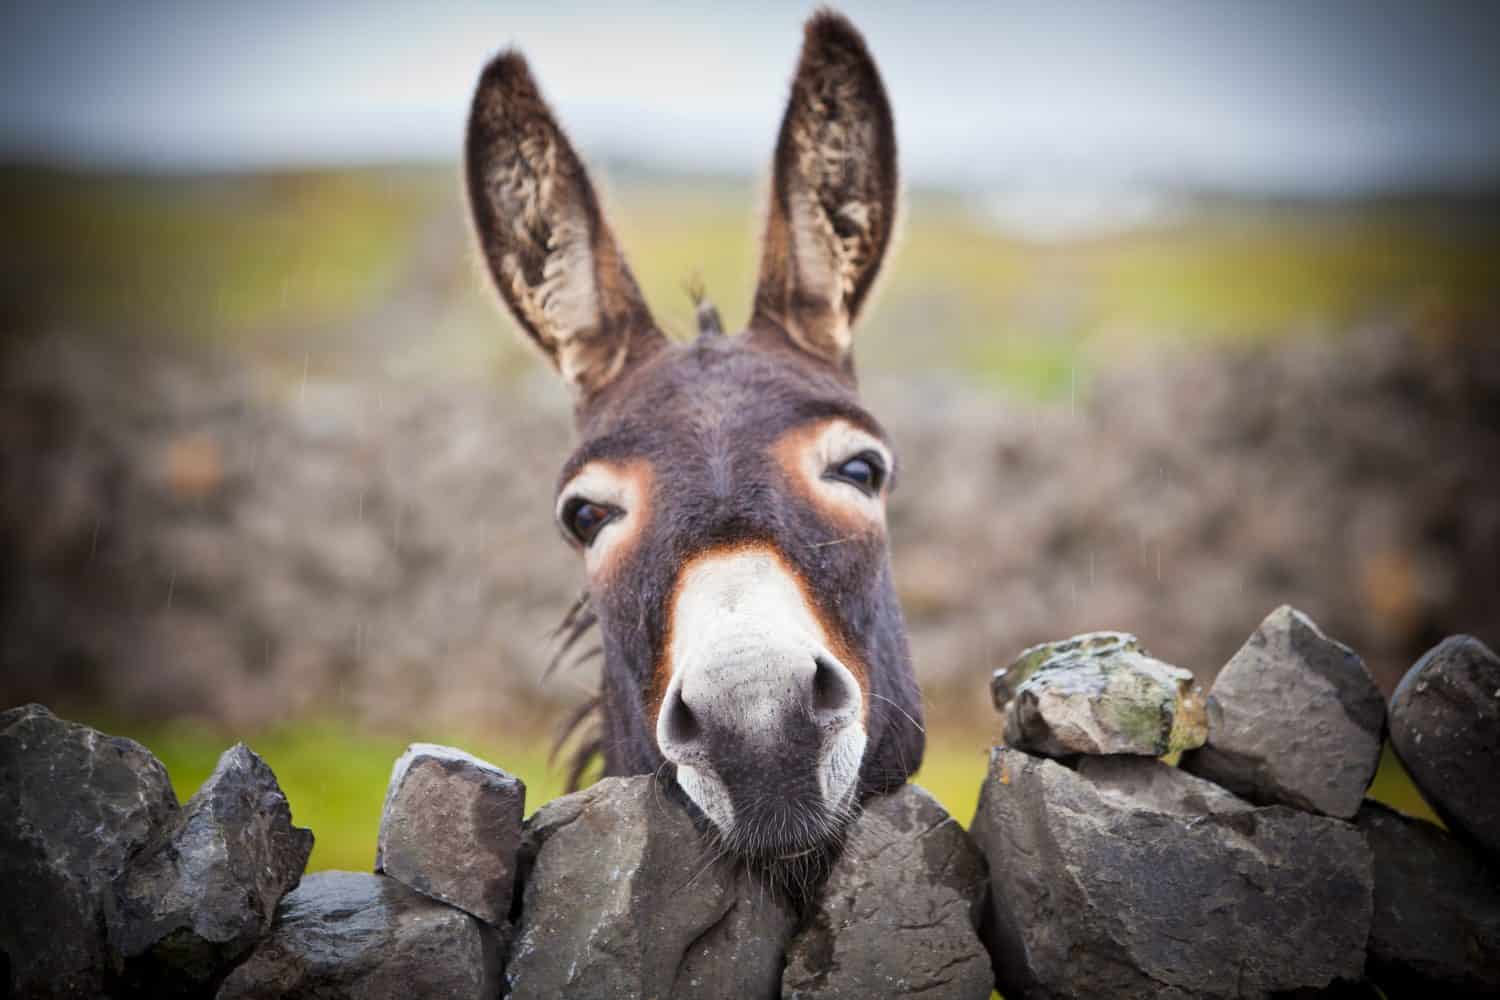 A donkey in Aran Islands, Ireland.